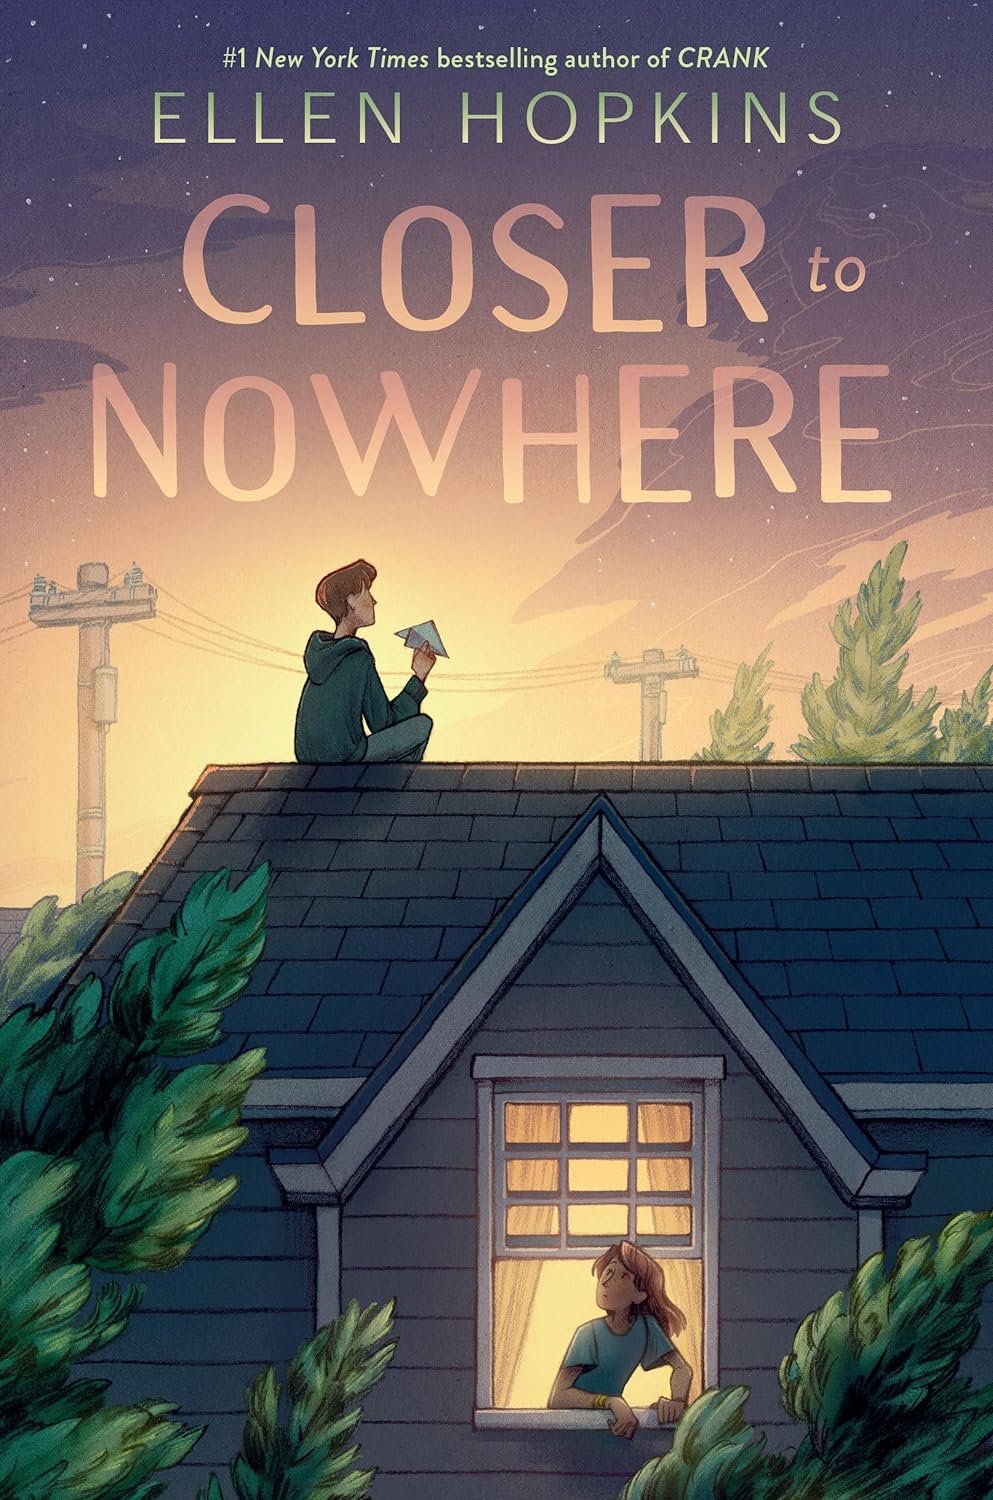 Closer to Nowhere by Ellen Hopkins